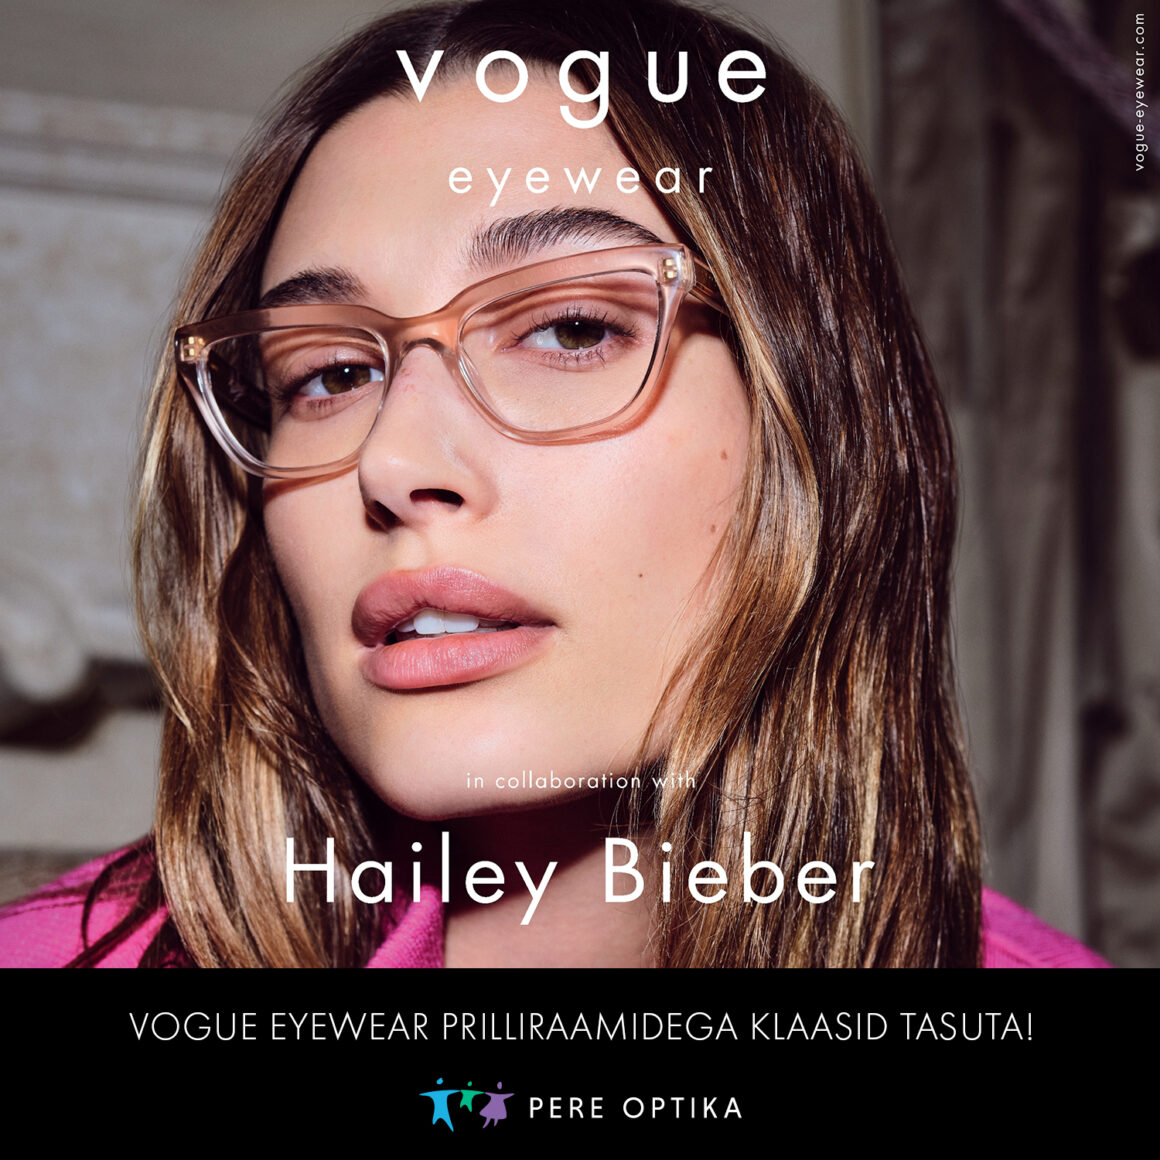 Brändikampaania Vogue Eyewear